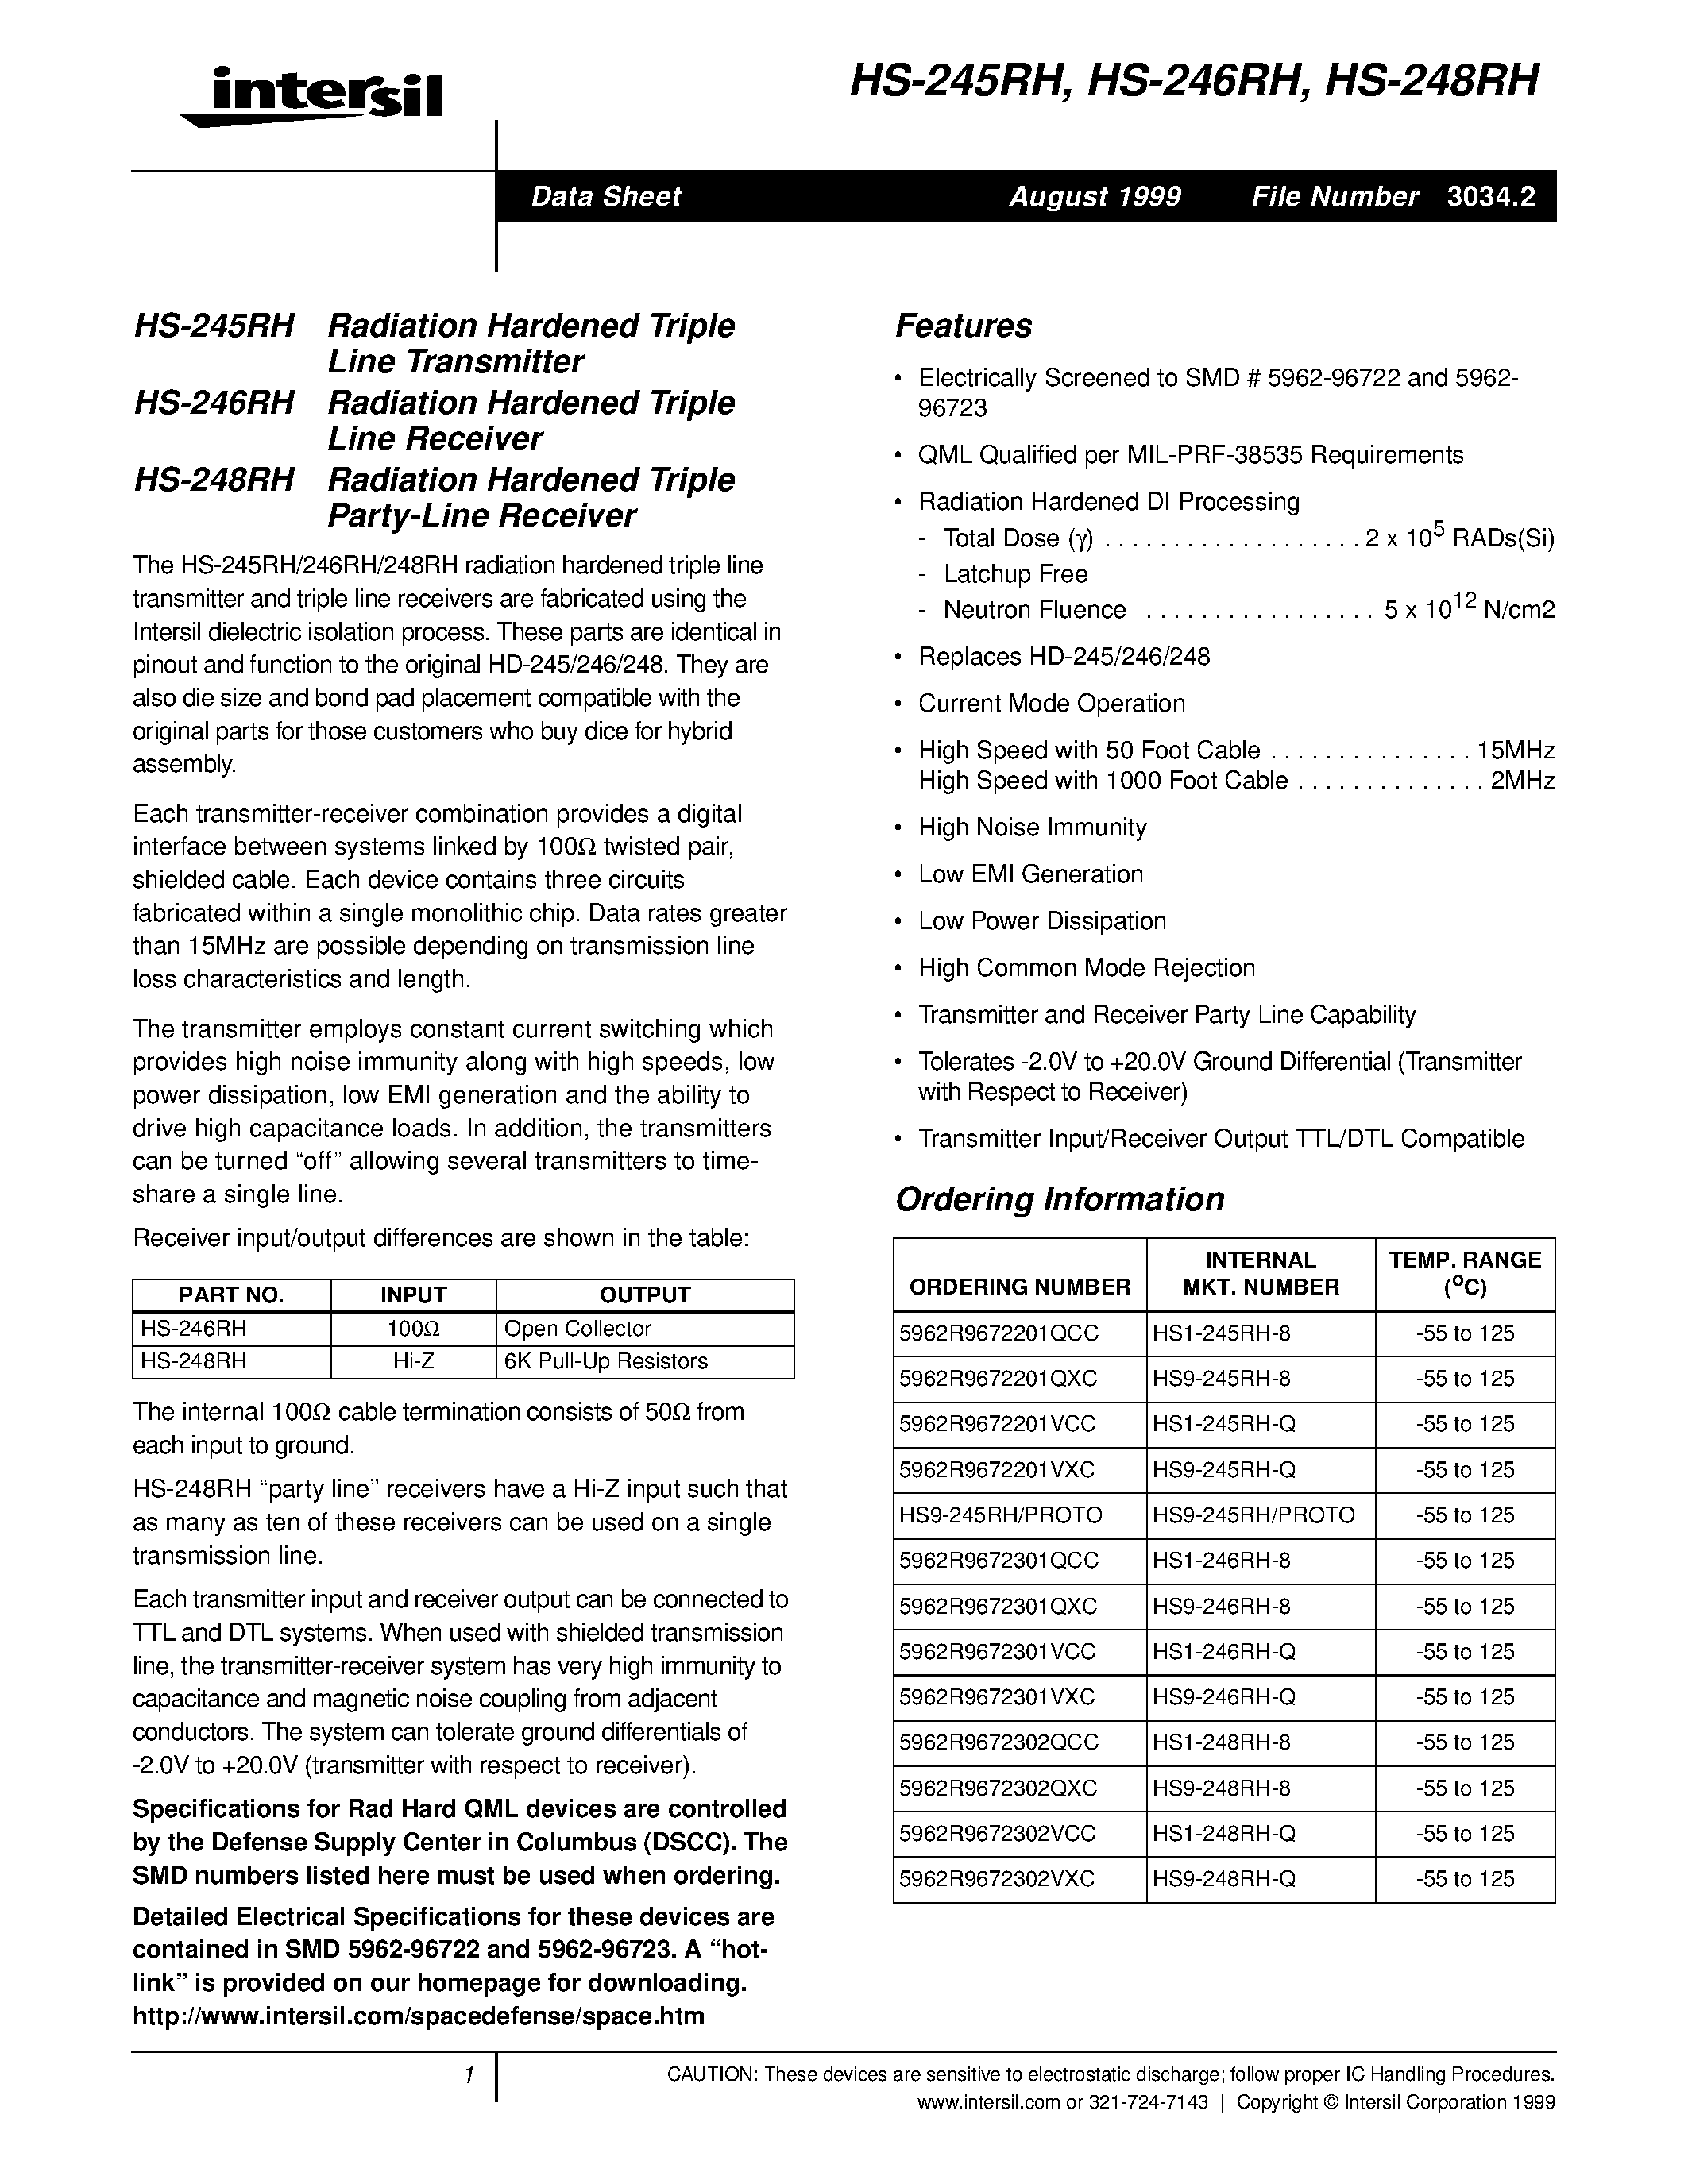 Datasheet HS9-245RH - Radiation Hardened Triple Line(party-Line) Transmitter page 1